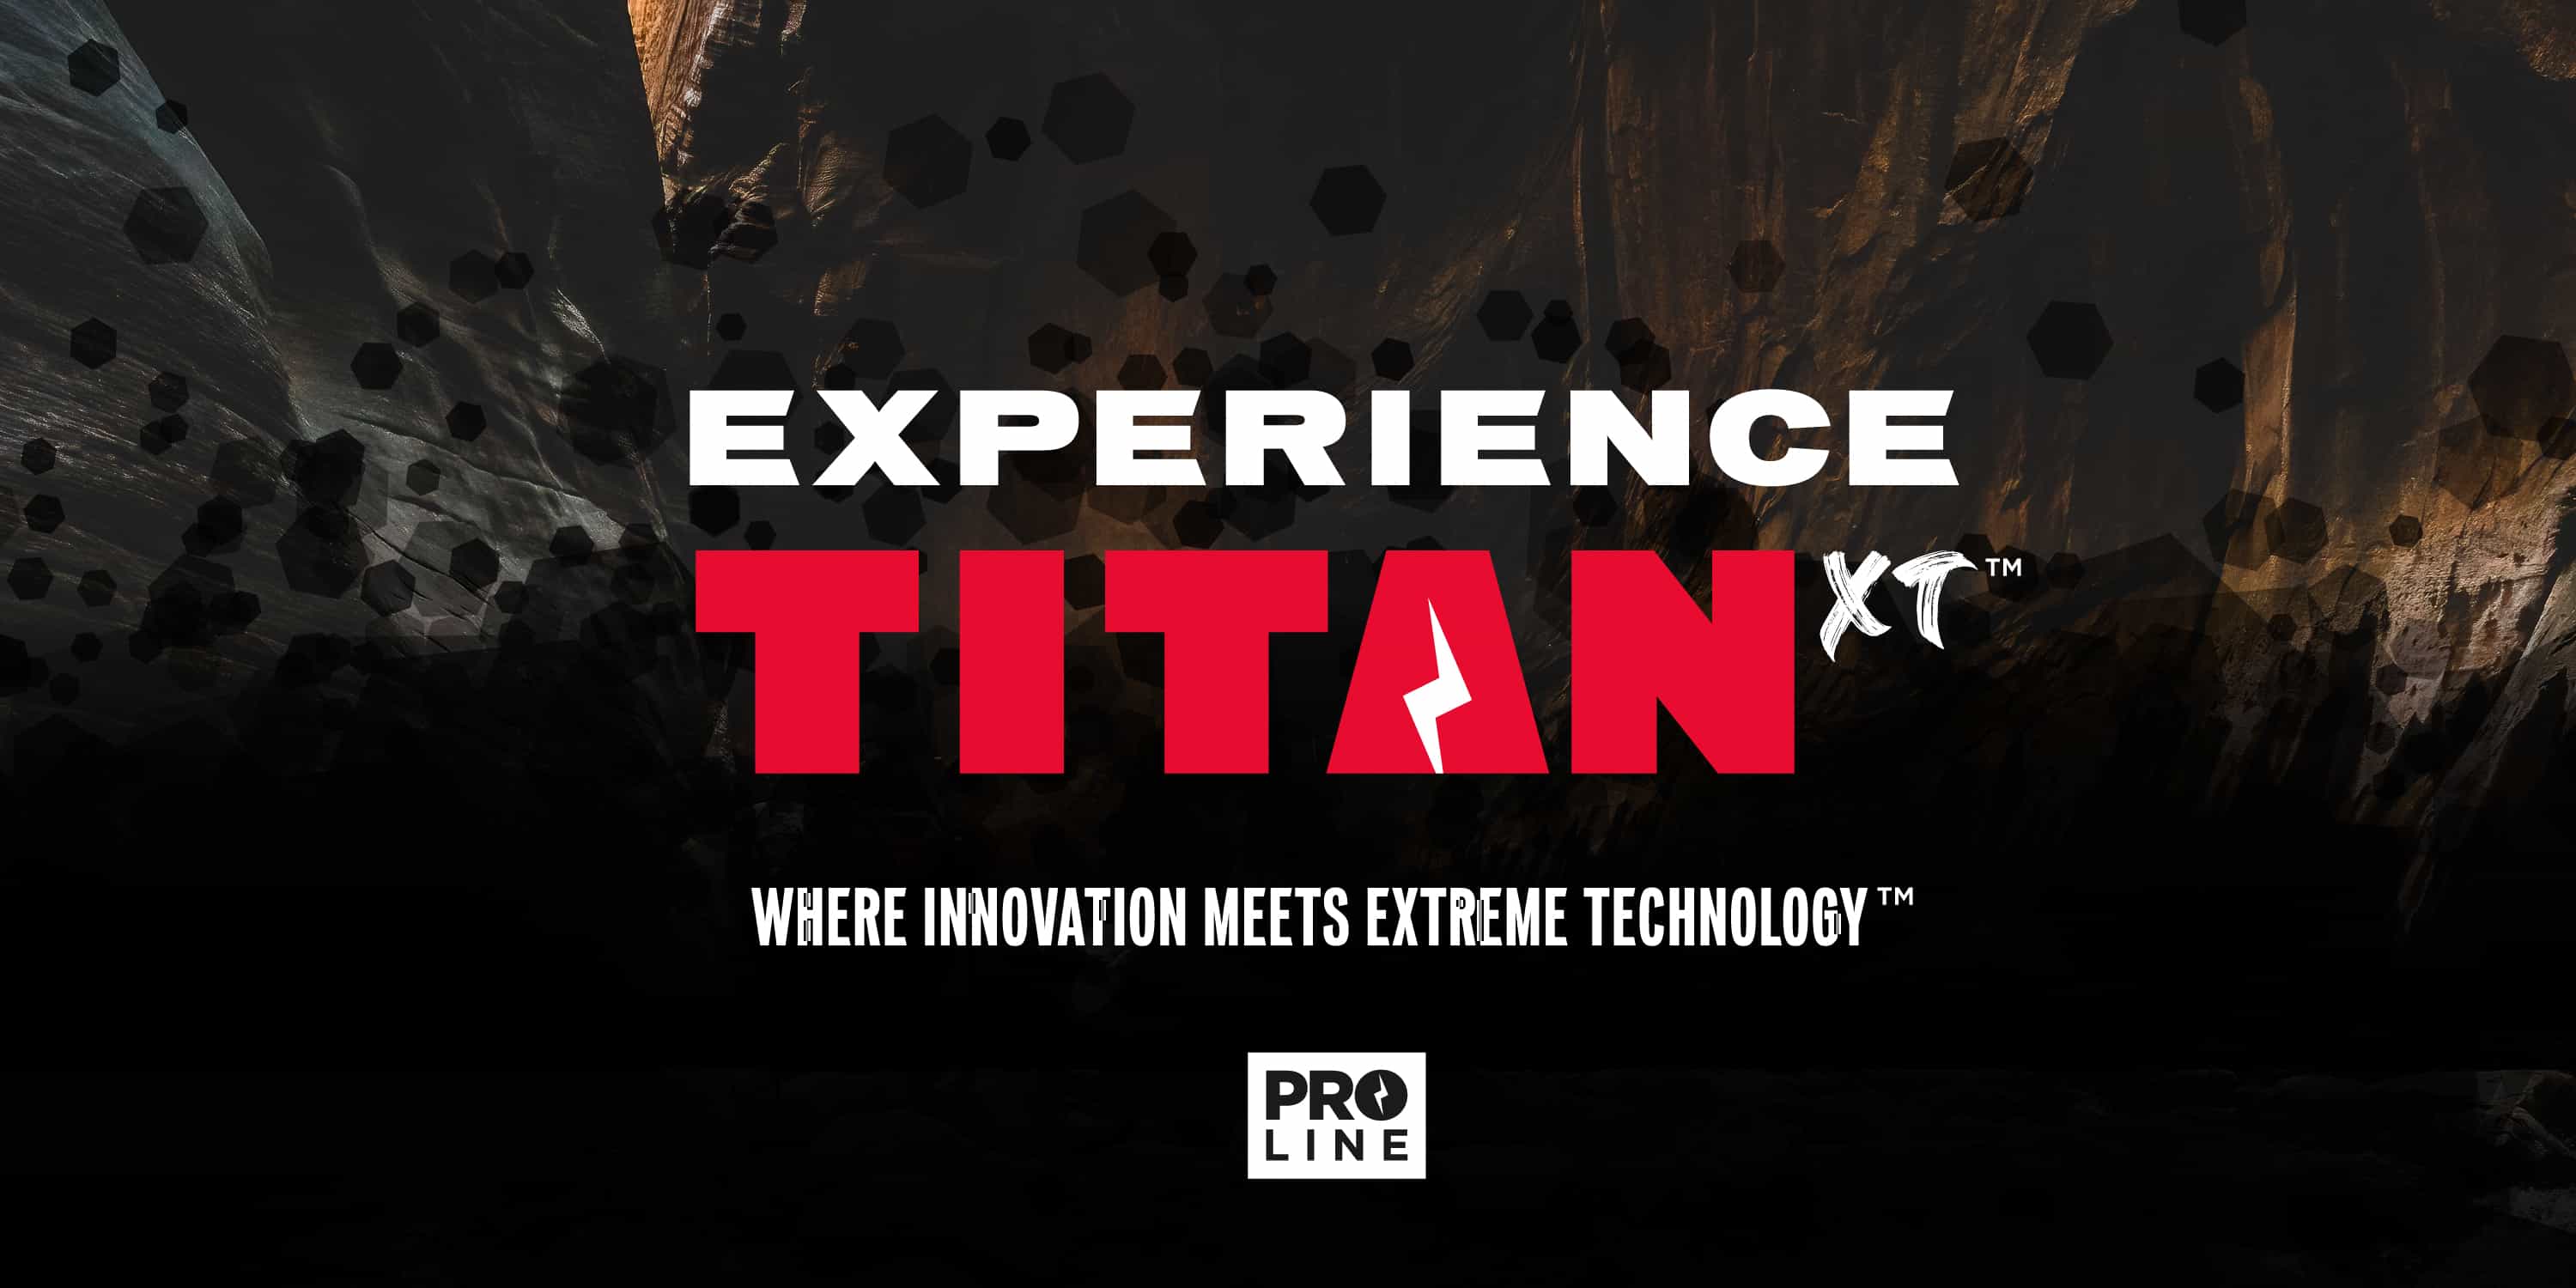 Experience Titan XT